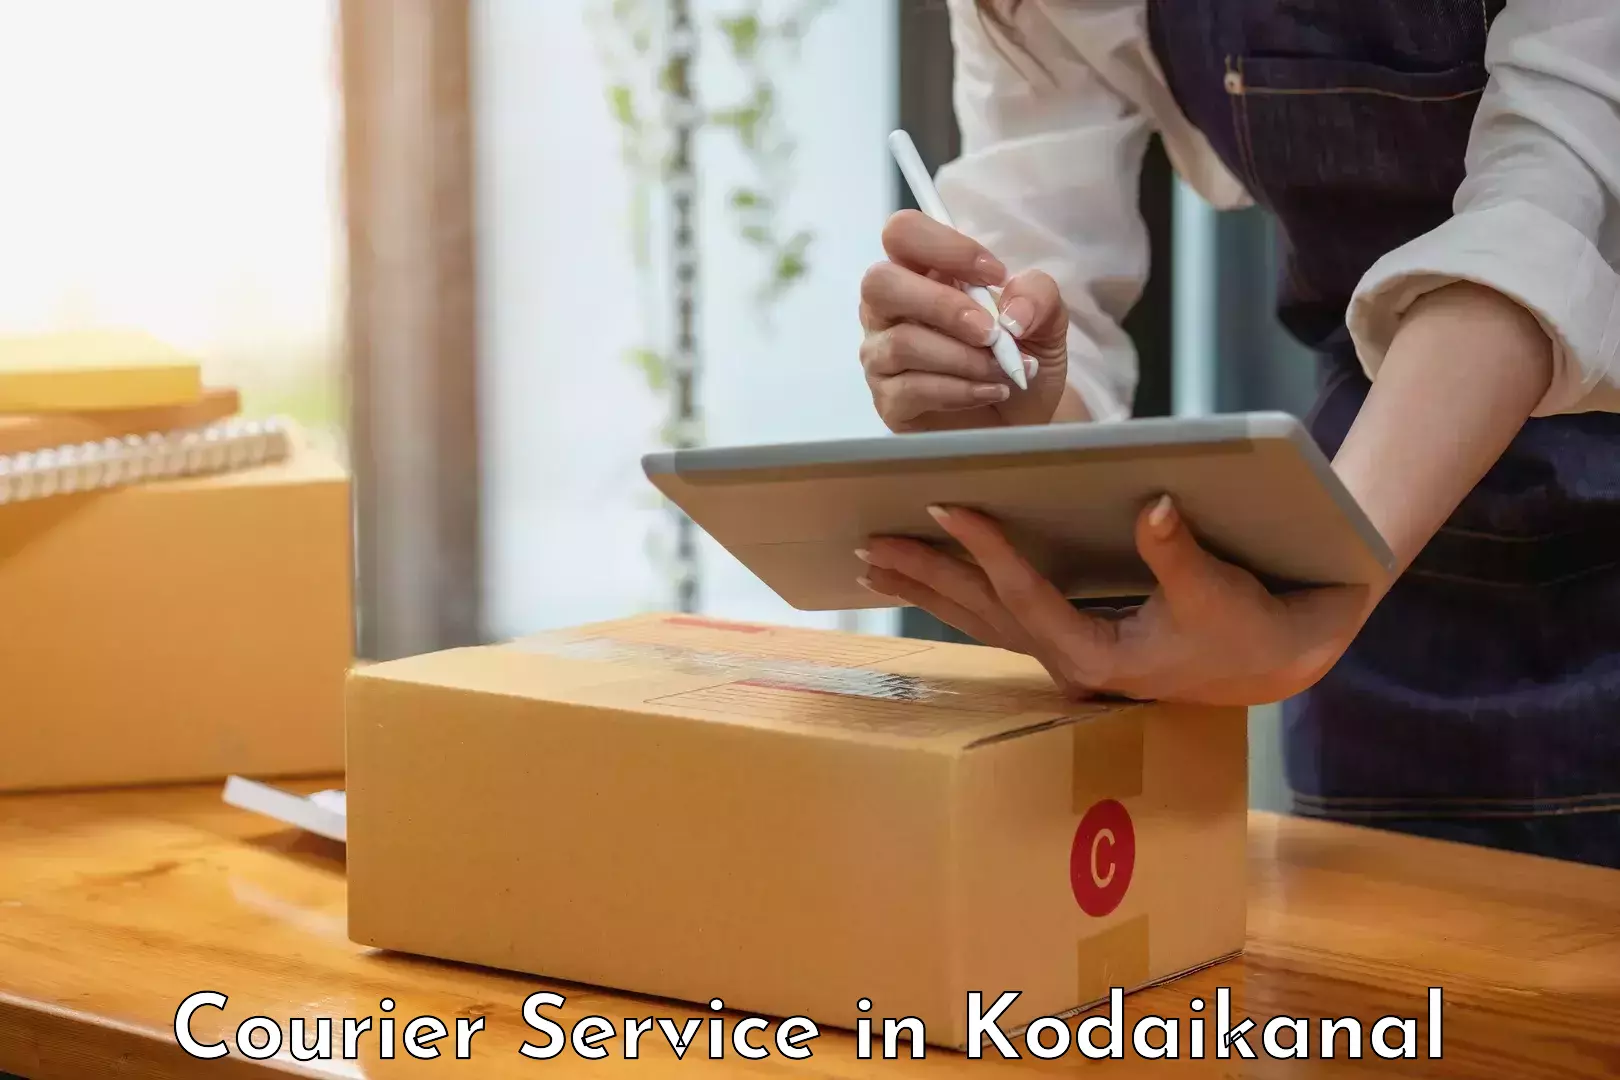 Digital courier platforms in Kodaikanal